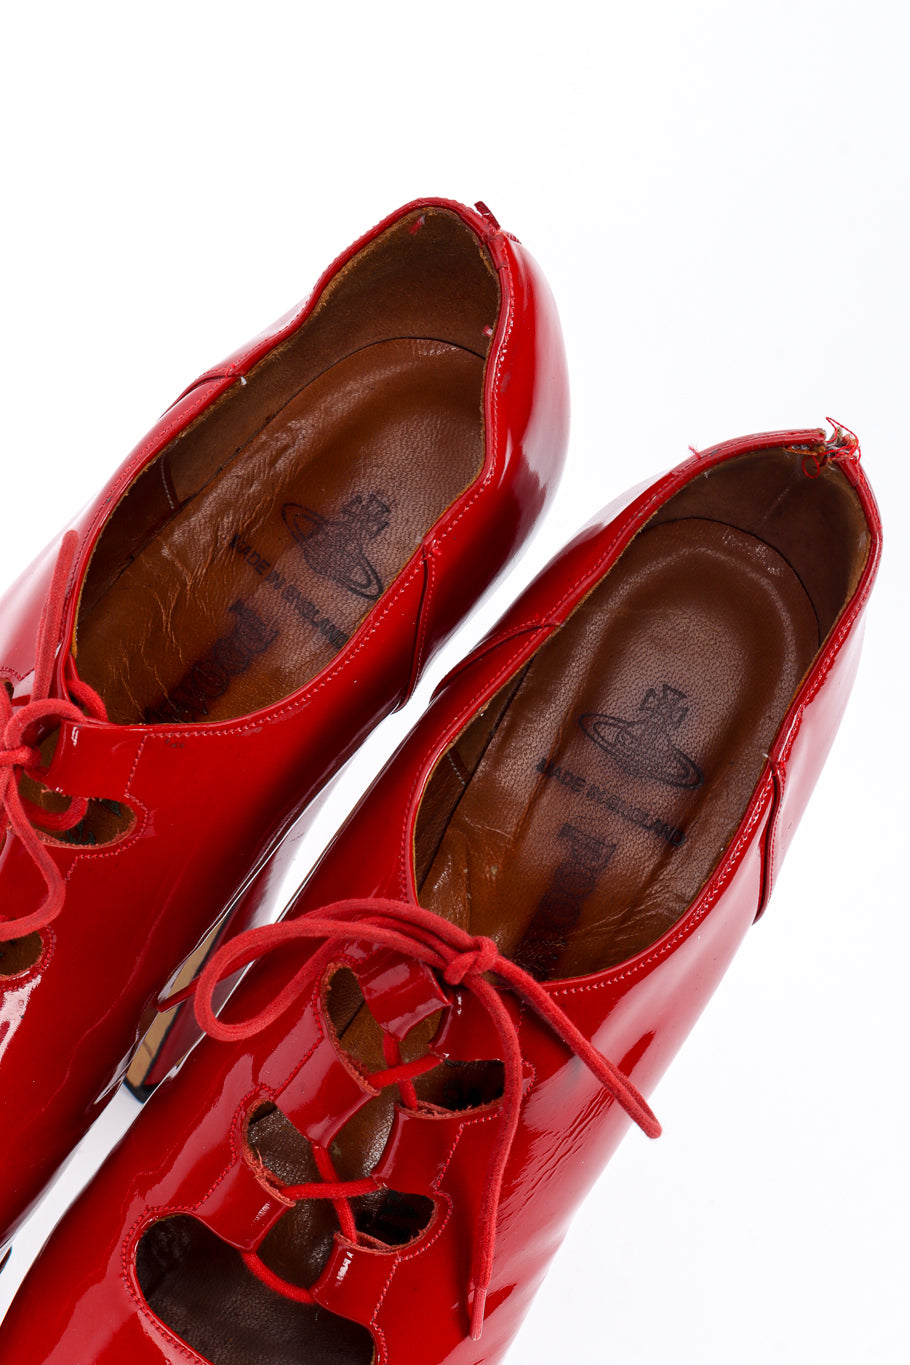 Vintage Vivienne Westwood 1993 F/W Patent Leather Super Elevated Ghillie Platforms branded soles @recessla